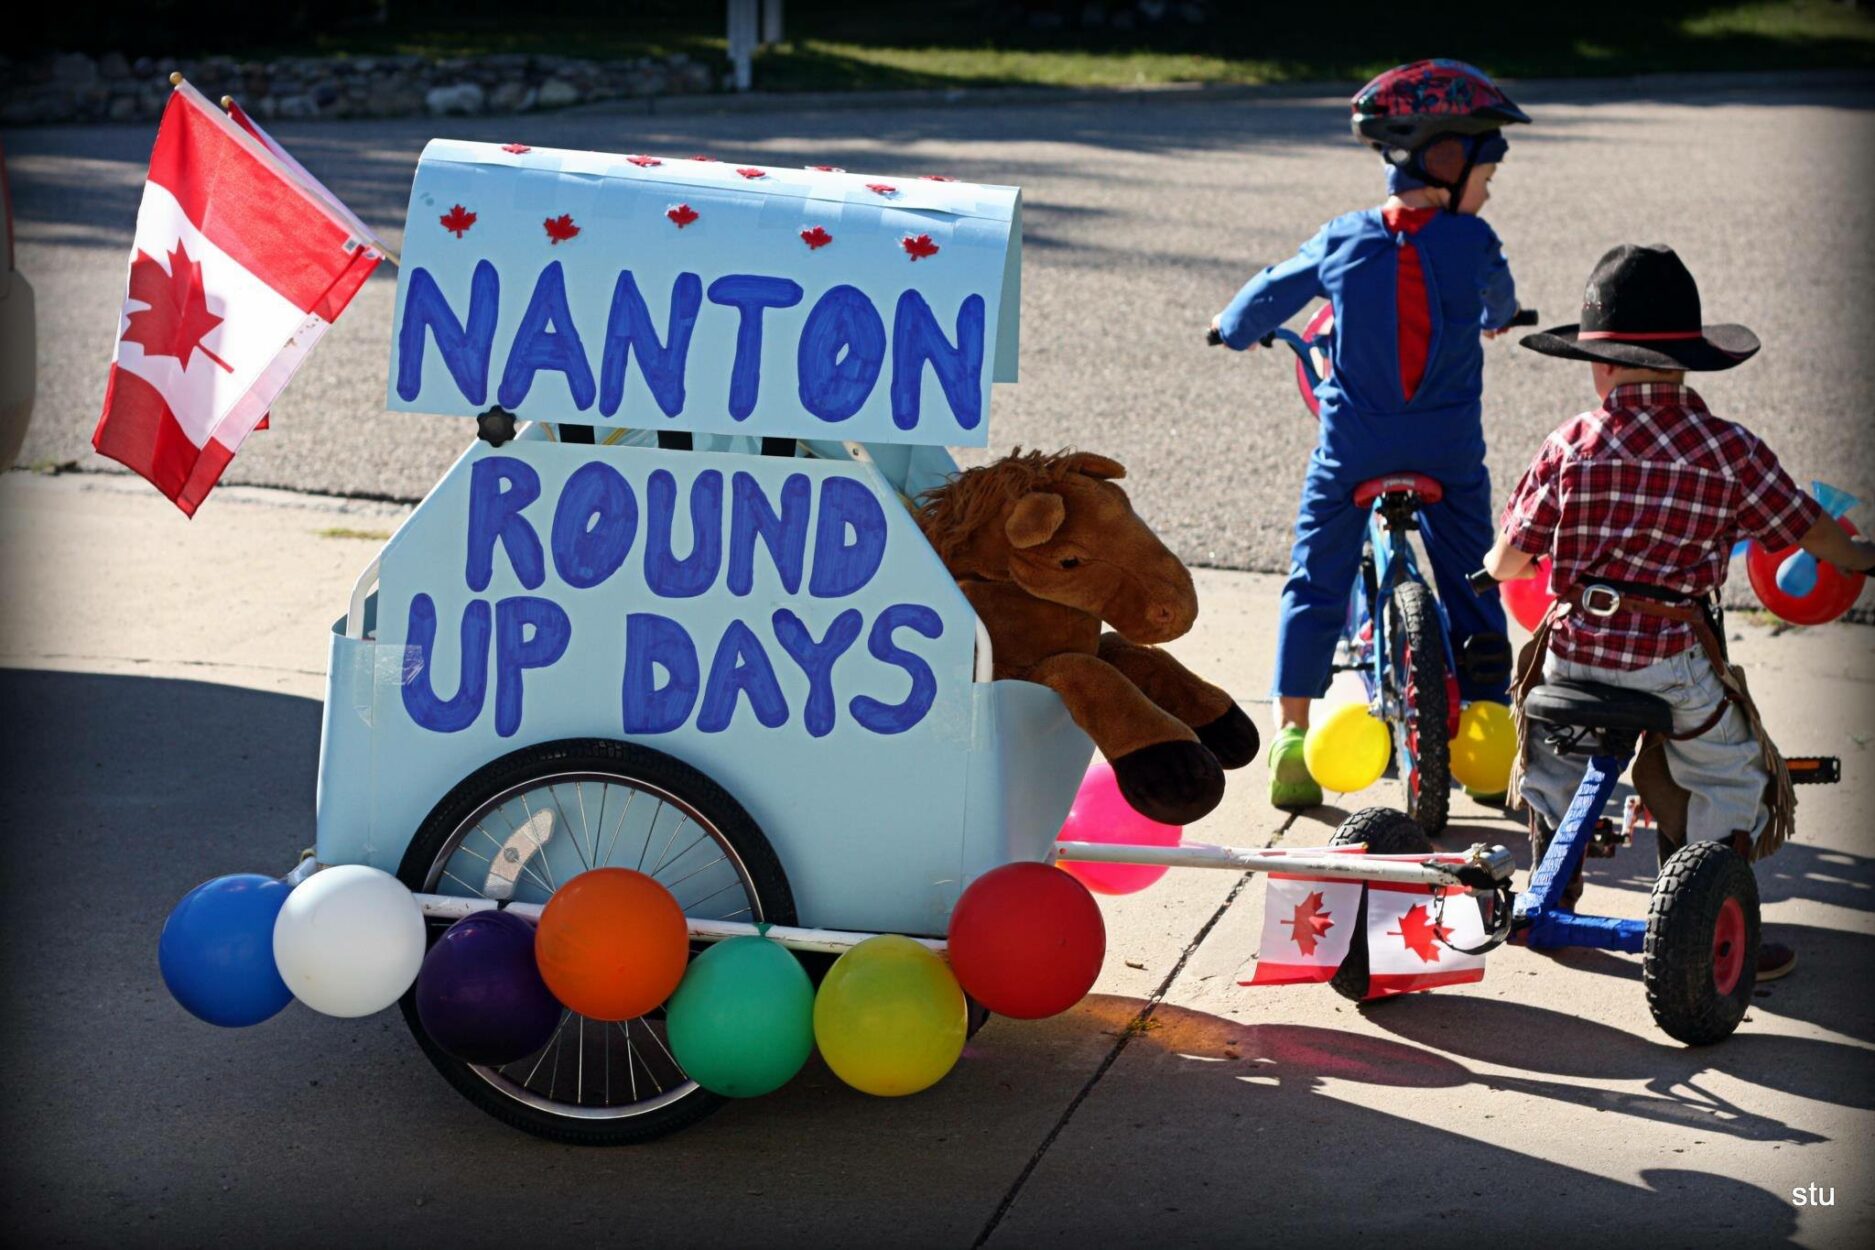 Nanton Round Up Days on Where Rockies